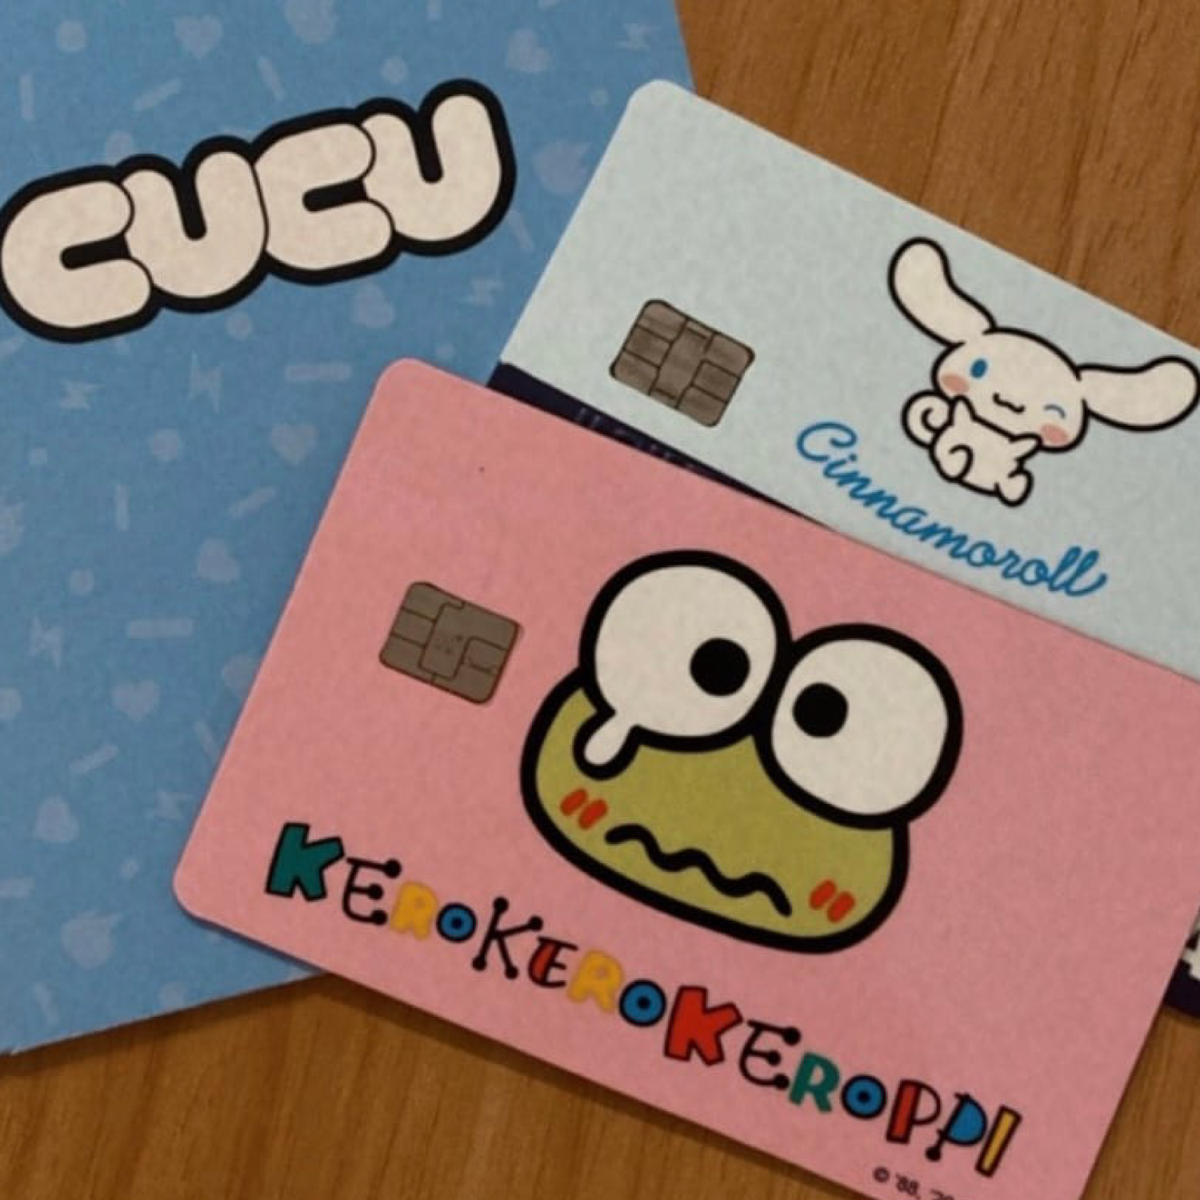 Customer showcasing their personalized Sanrio debit credit card skin